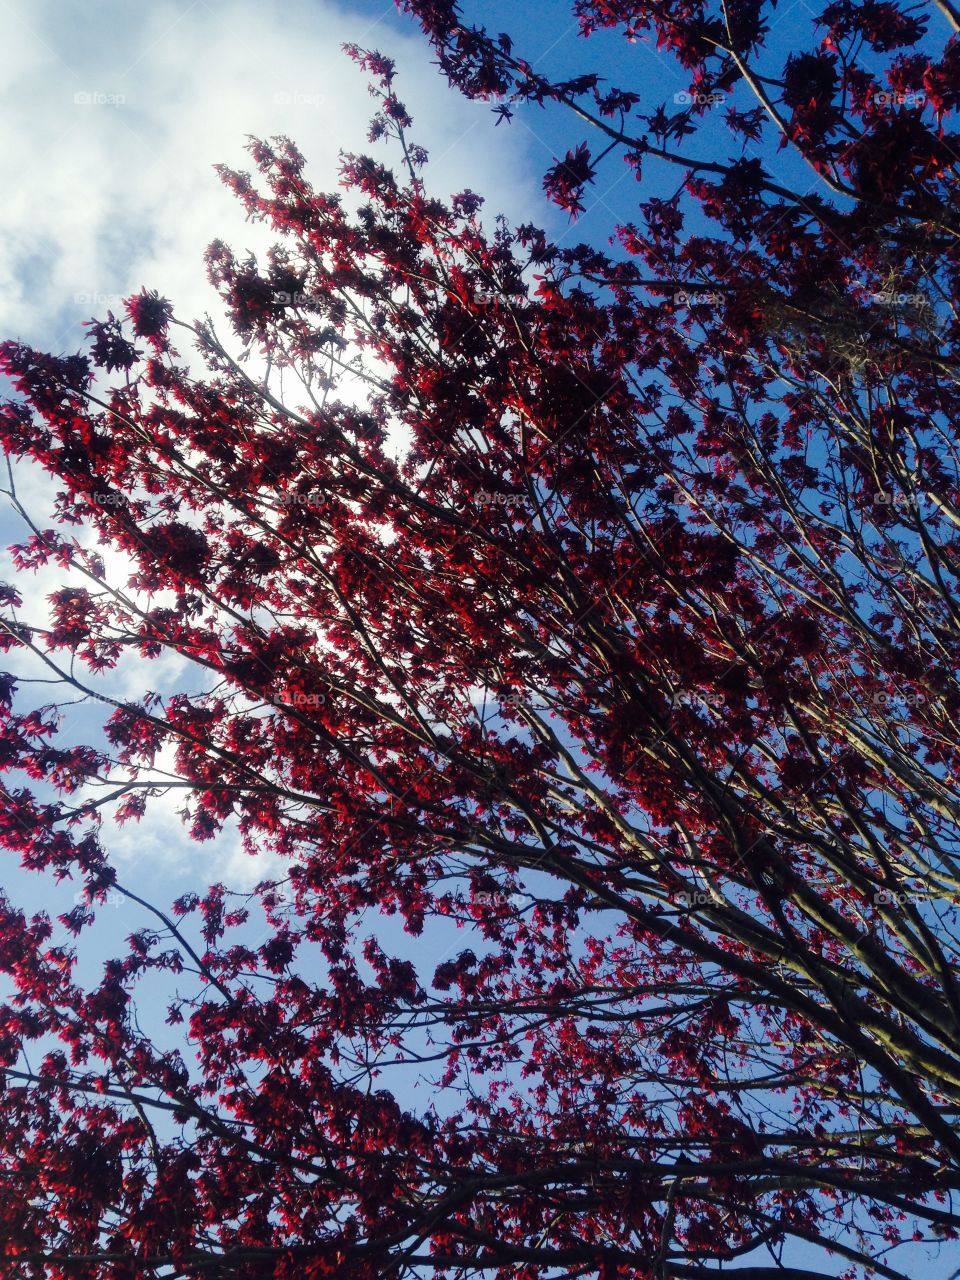 cheery blossom tree against sky